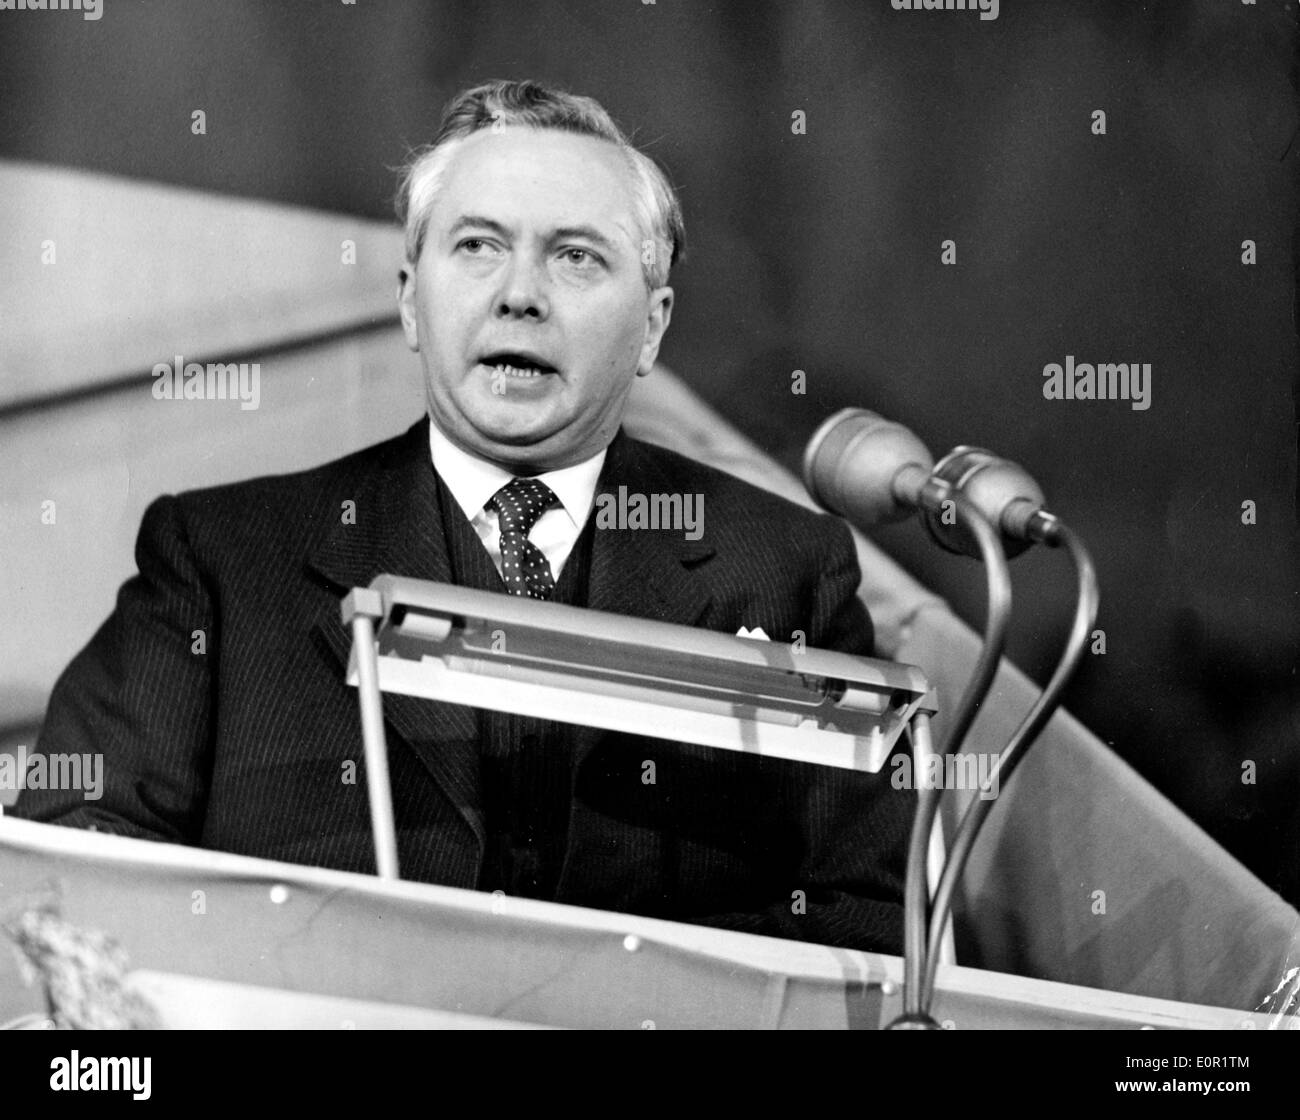 Harold Wilson giving a speech at Labour Party Congress Stock Photo